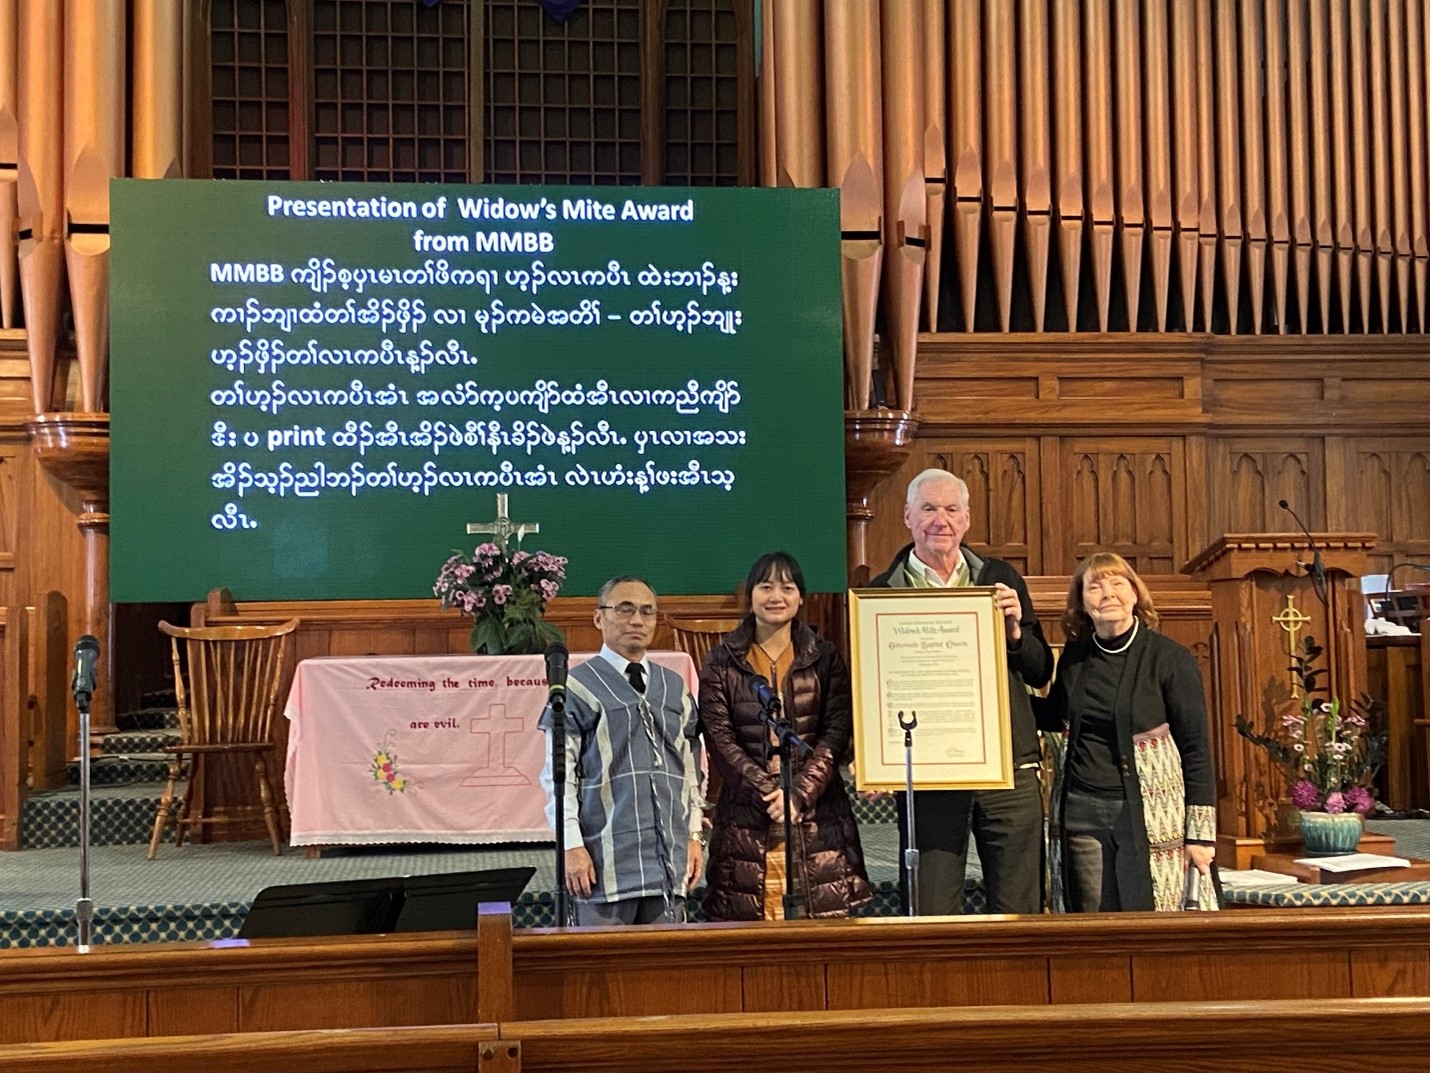 Tabernacle Baptist Church Recipient of 2022 Widow’s Mite Award